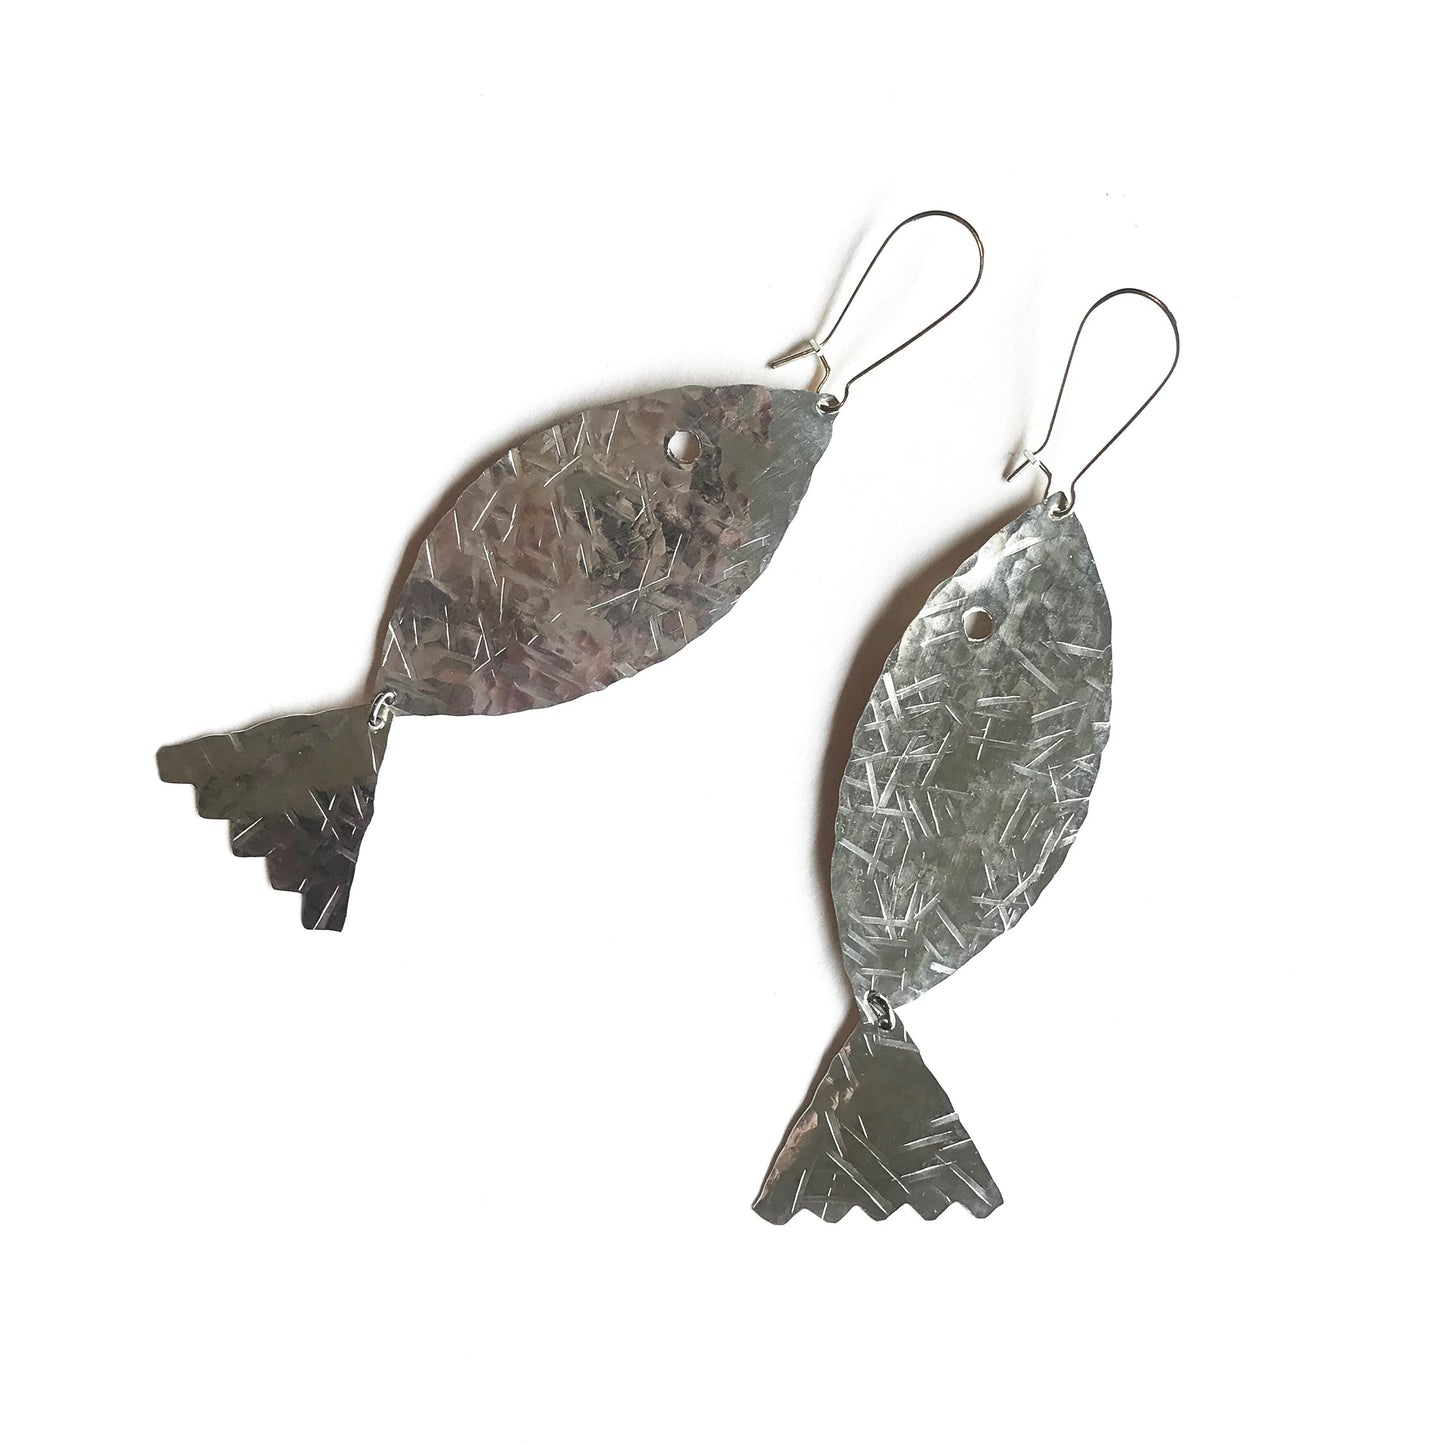 Modern hand hammered fish earrings